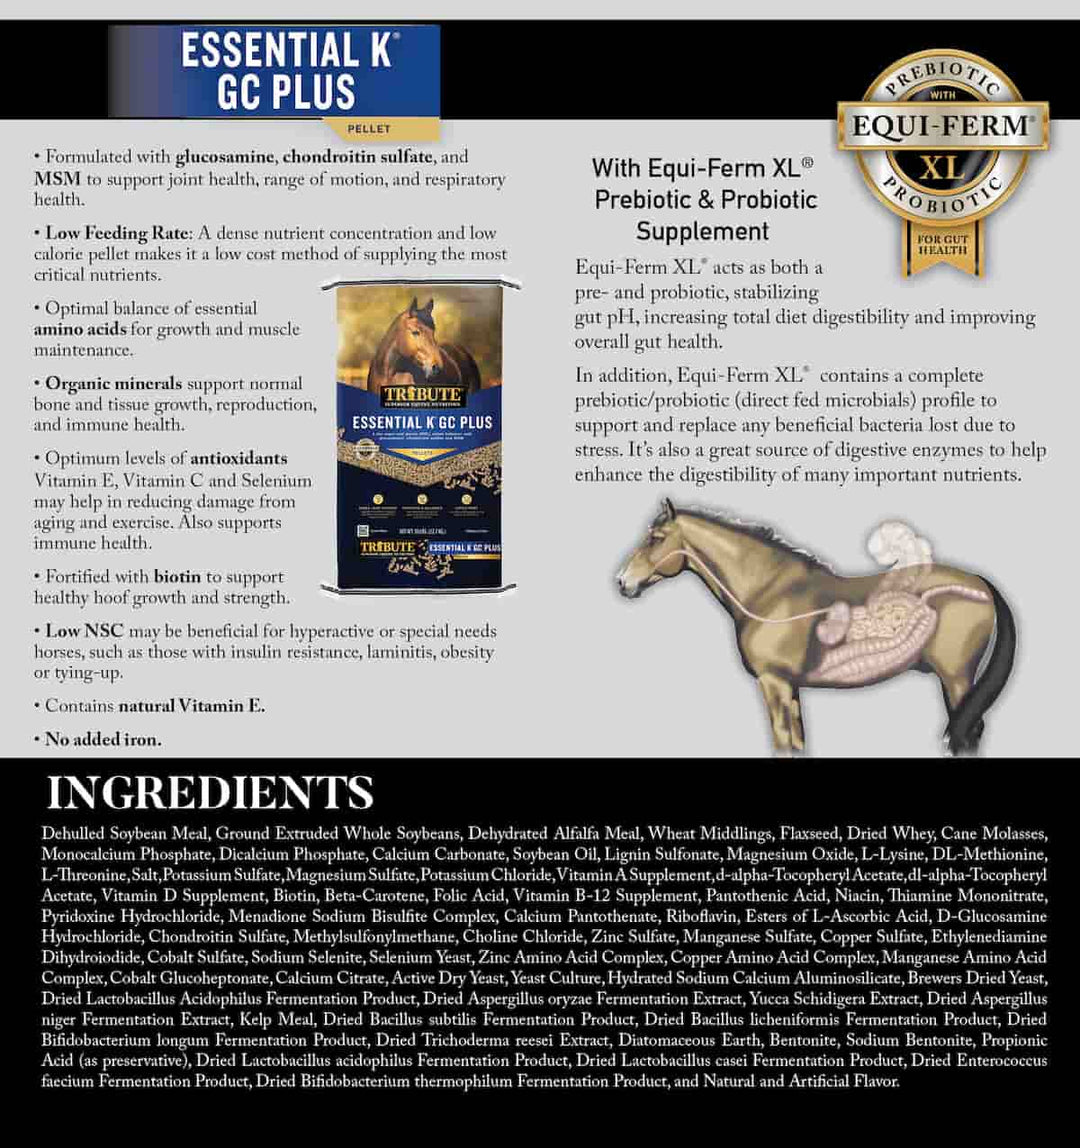 tribute essential k gc plus horse feed ingredients graphic